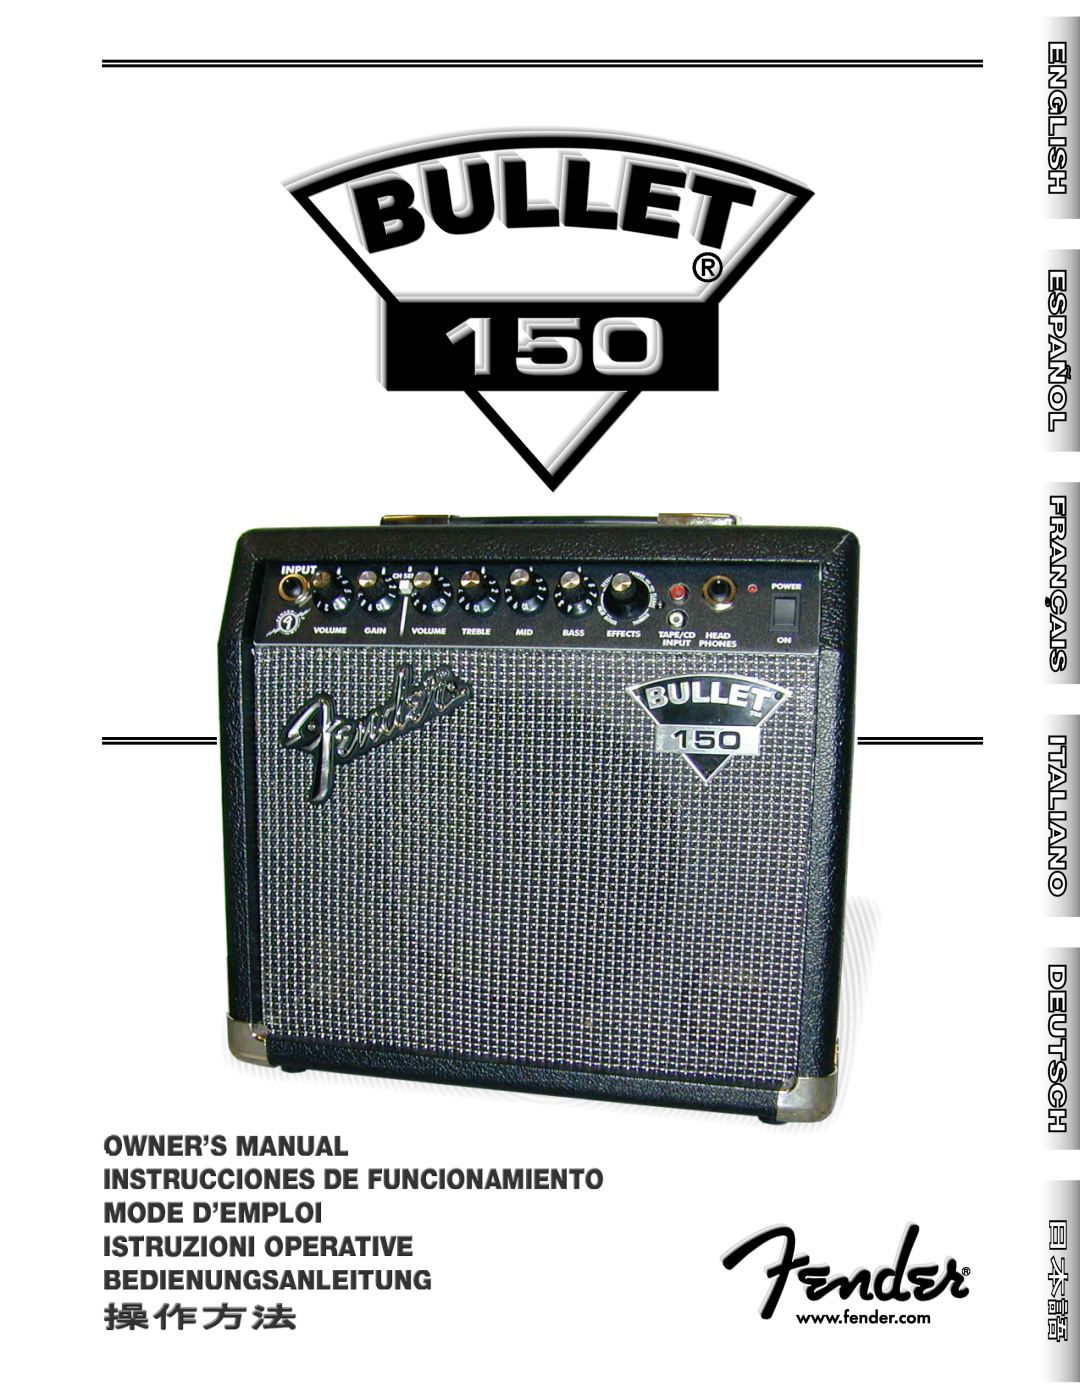 Fender 150 manual 